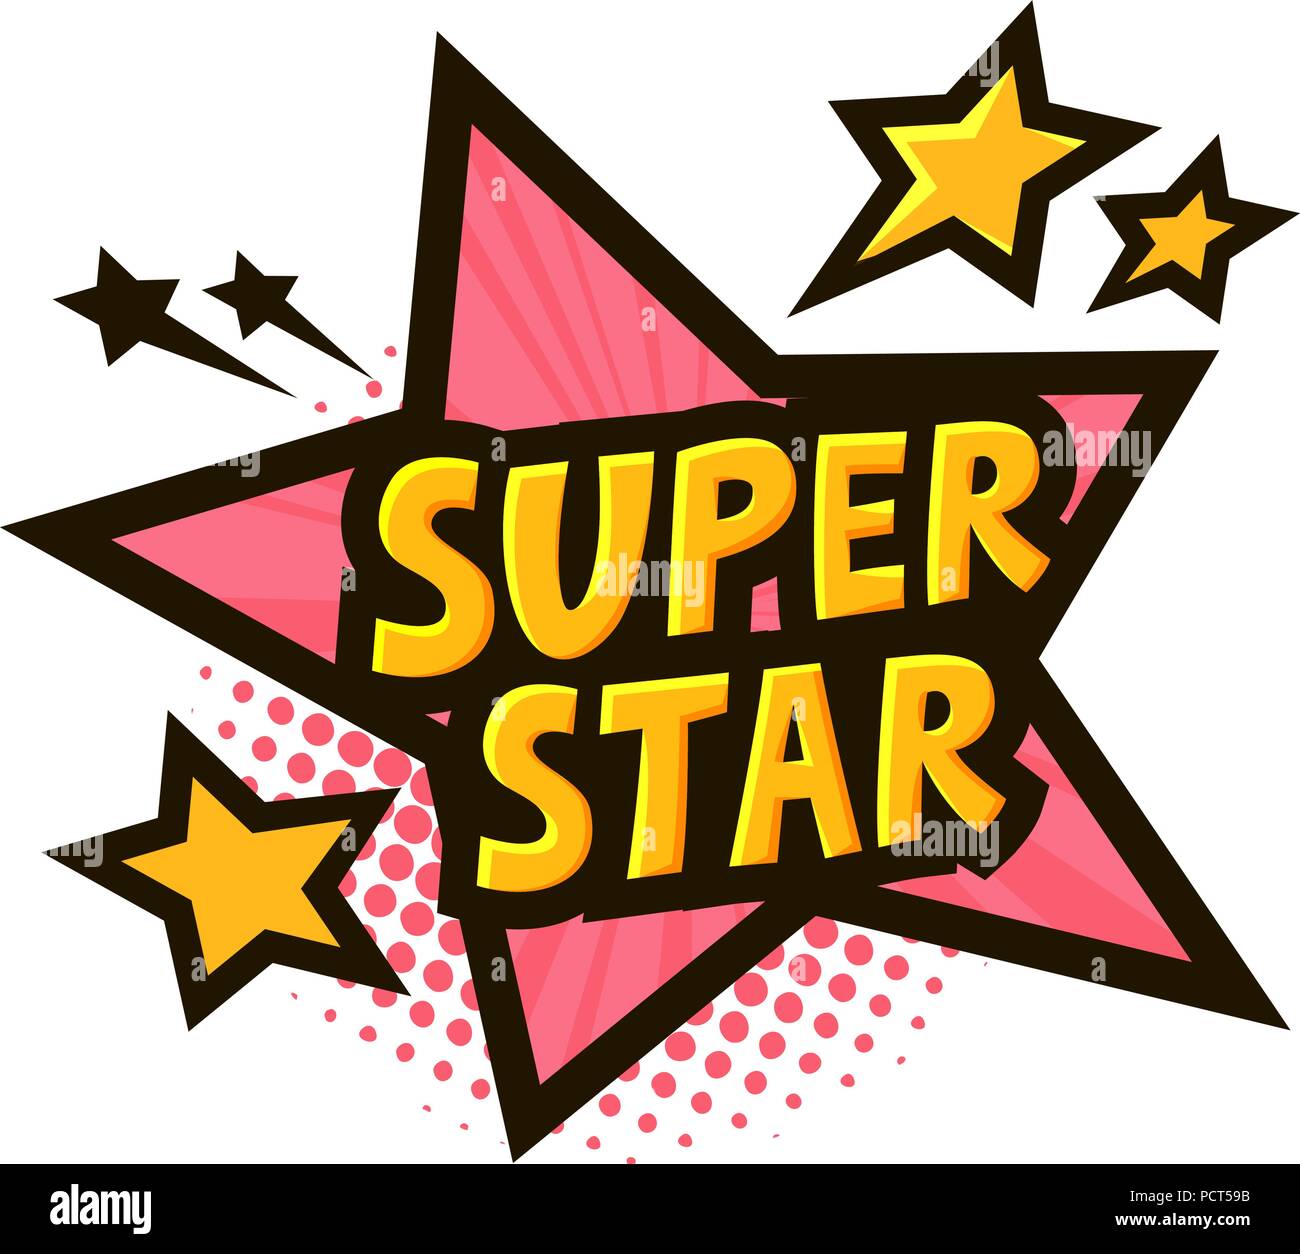 Super star, banner or sticker. Vector illustration in style comic pop art Stock Vector